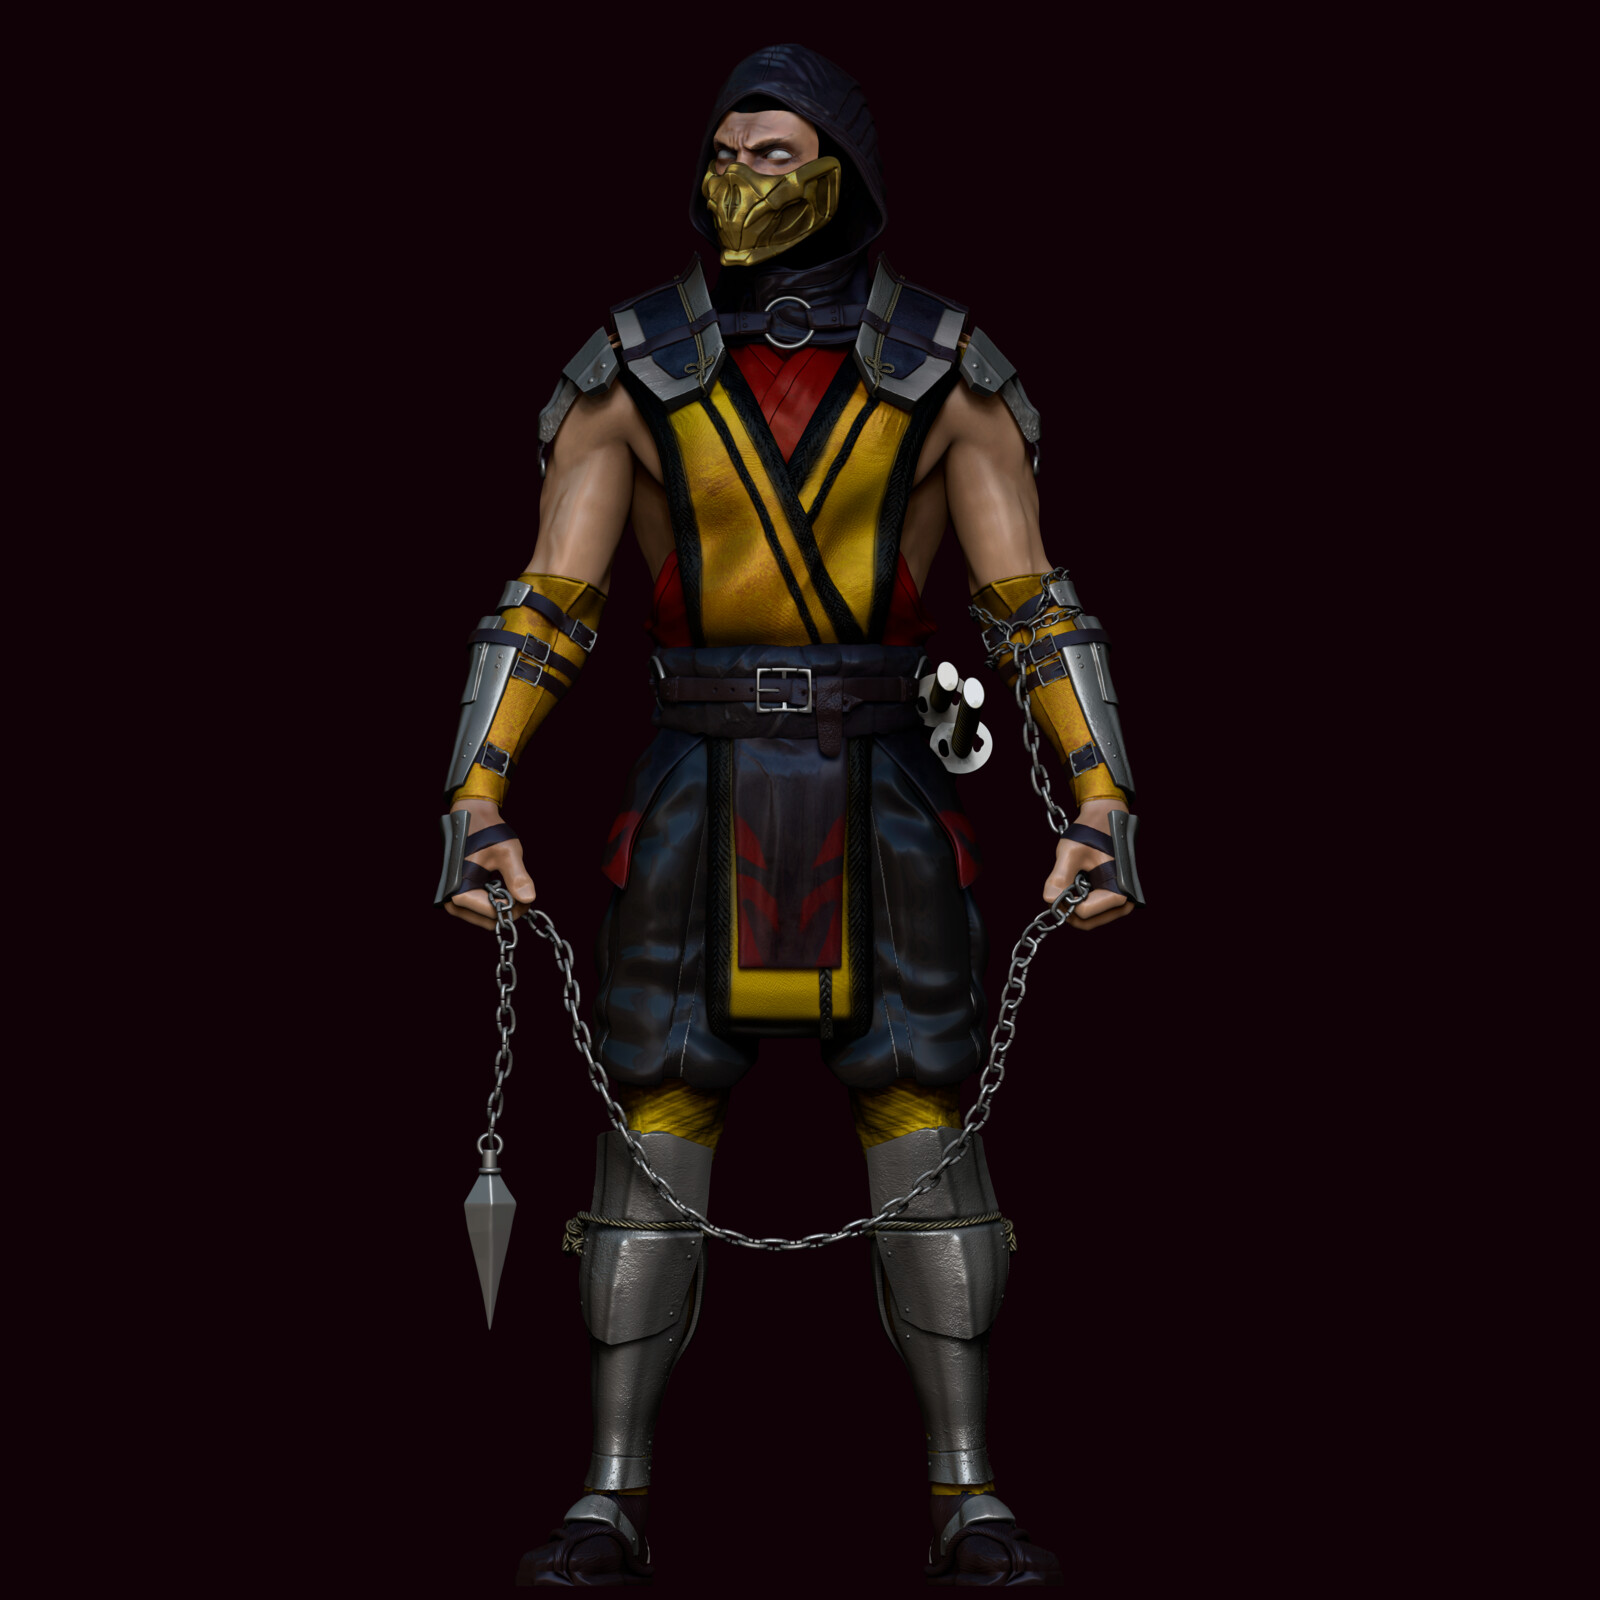 Scorpion - Mortal Kombat ( MK 11 )
(PS)